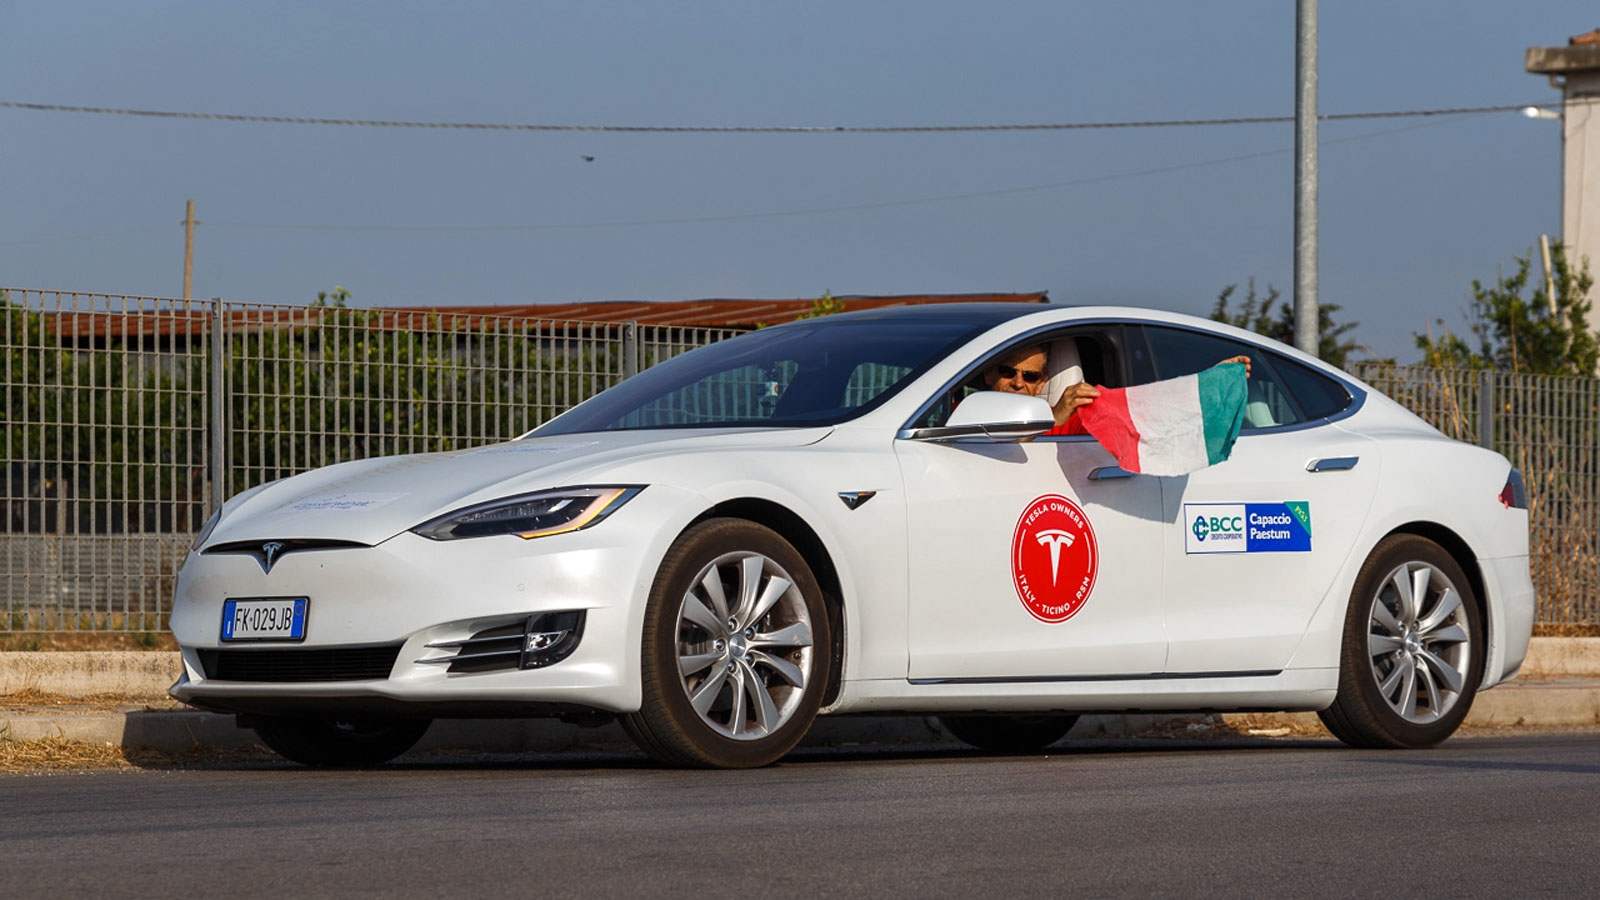 Tesla fans reach a symbolic long-distance EV driving milestone | DeviceDaily.com